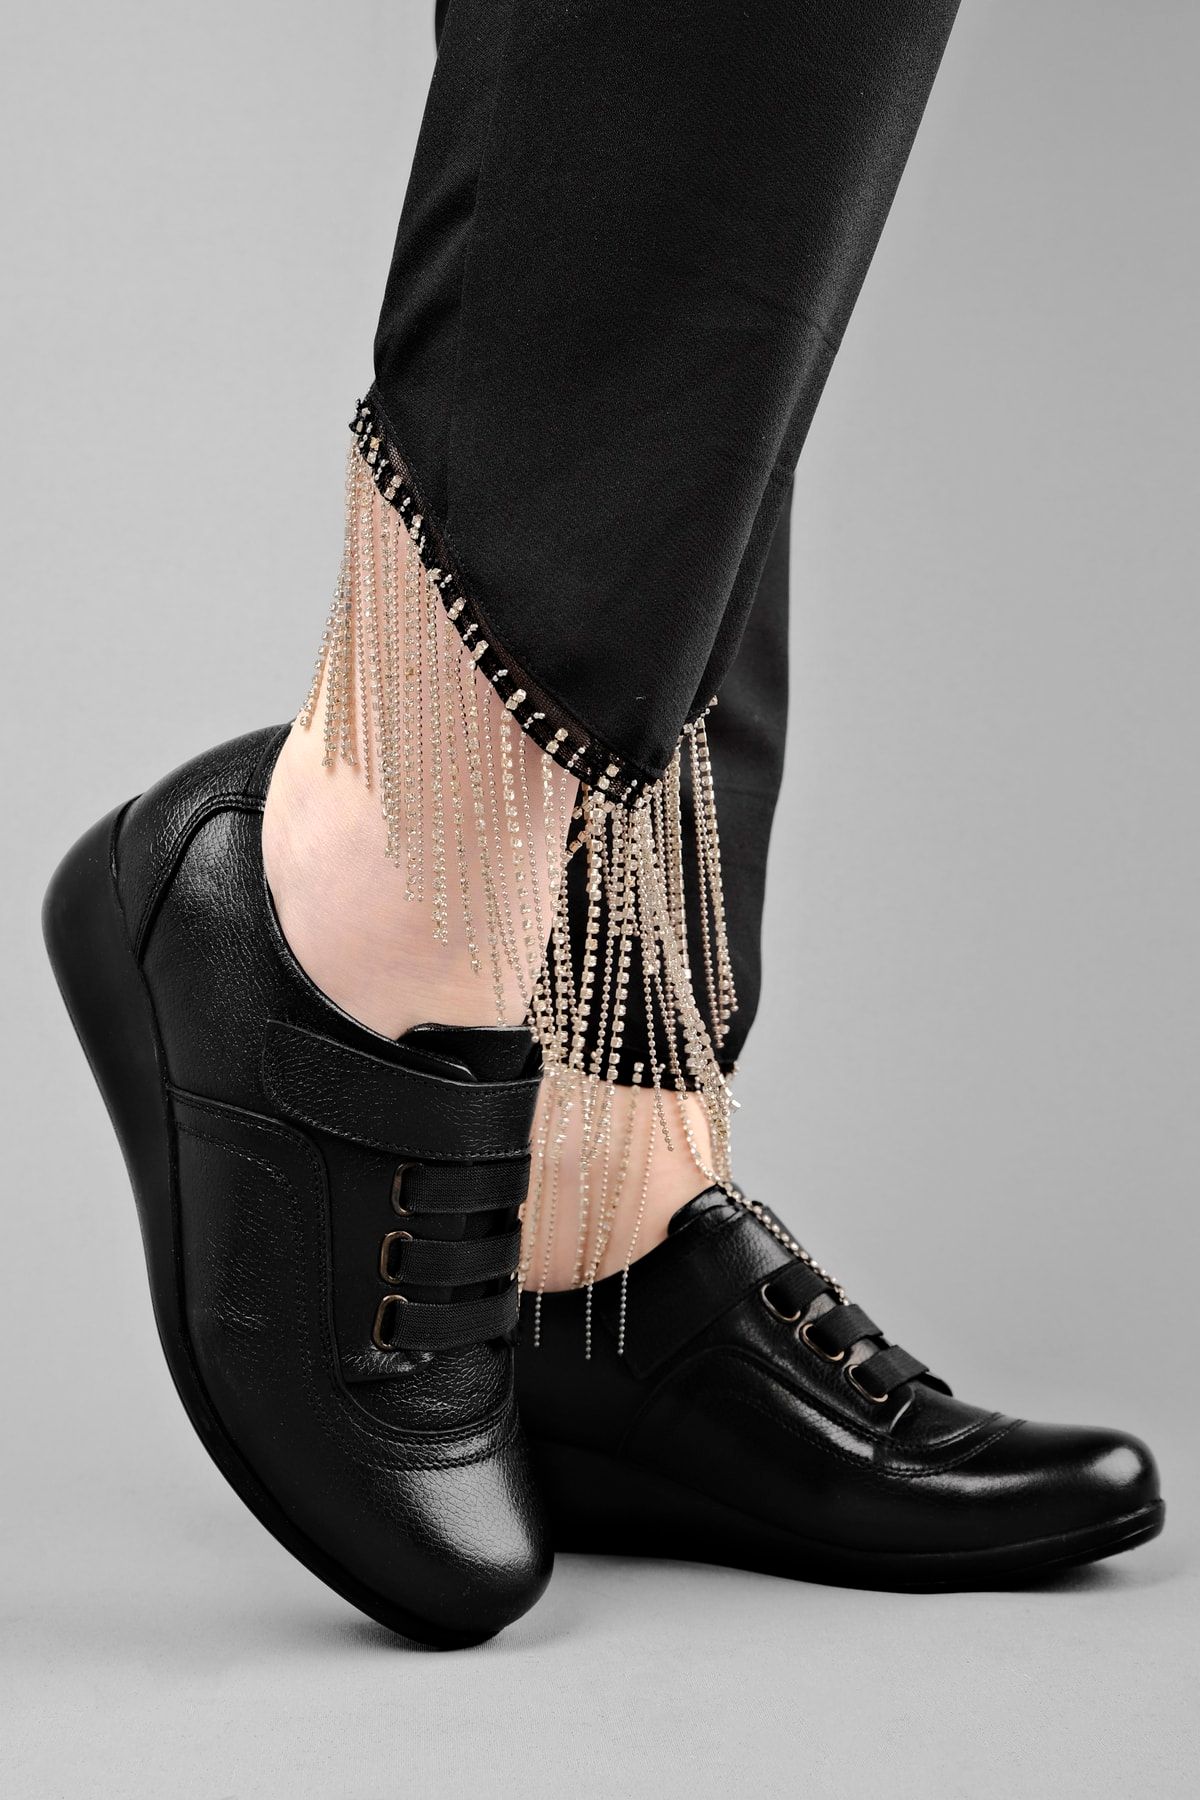 LAL SHOES & BAGS Mera Kadın Dolgu Topuk Hakiki Deri Ayakkabı Bantlı-siyah